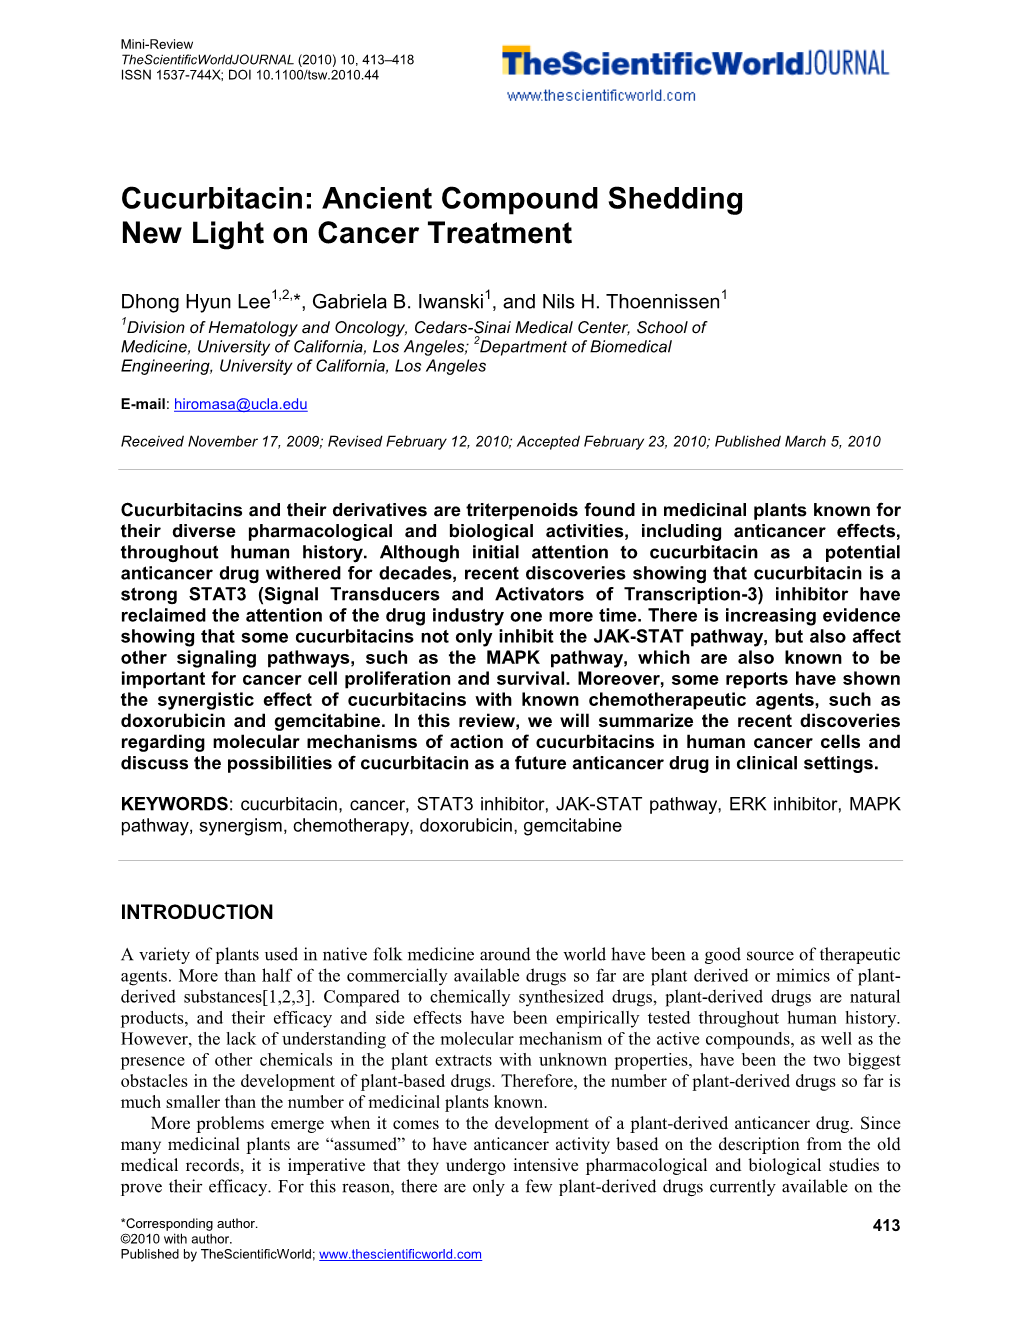 Cucurbitacin: Ancient Compound Shedding New Light on Cancer Treatment